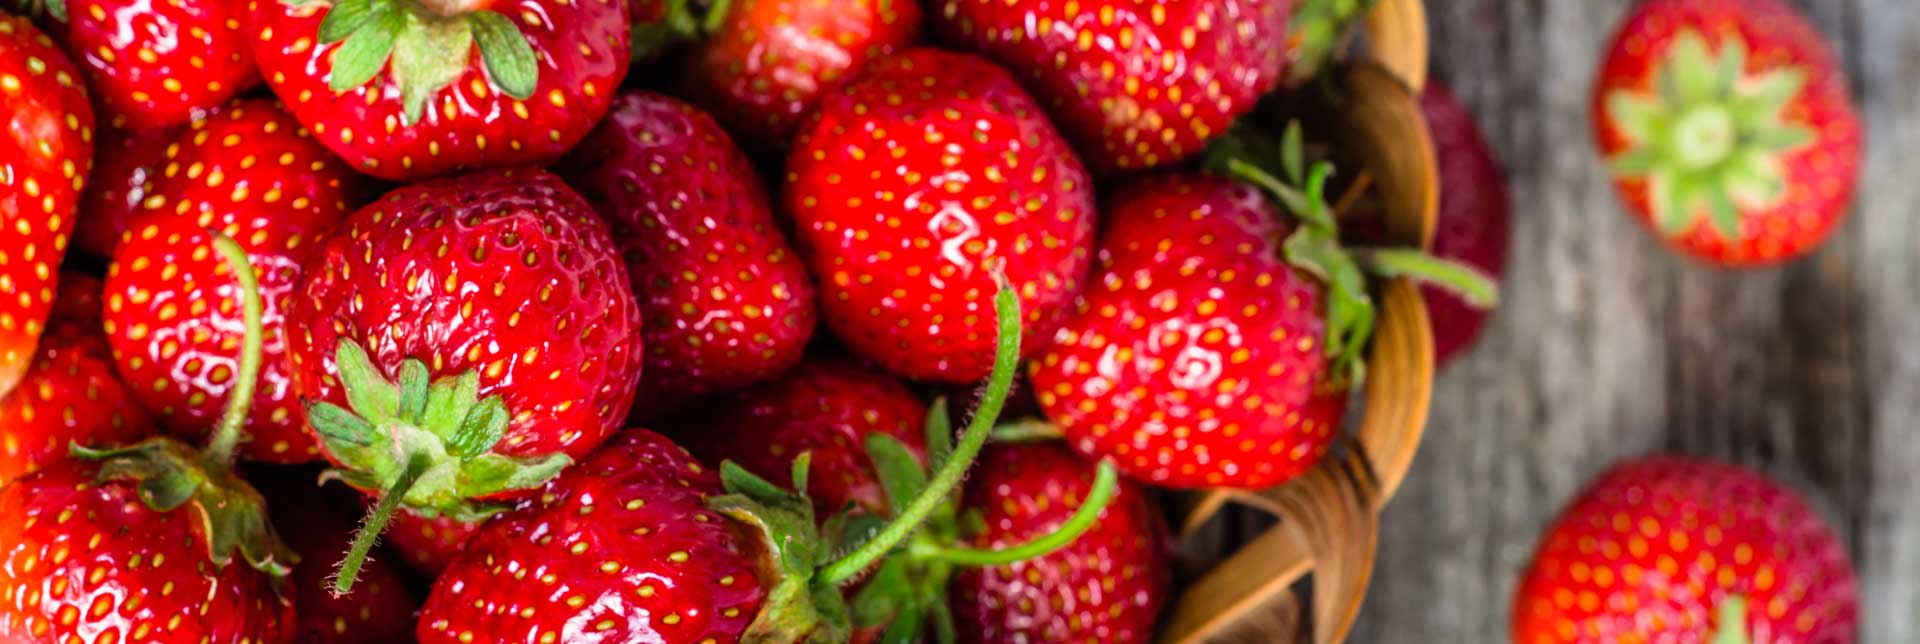 header-banner-strawberries.jpg